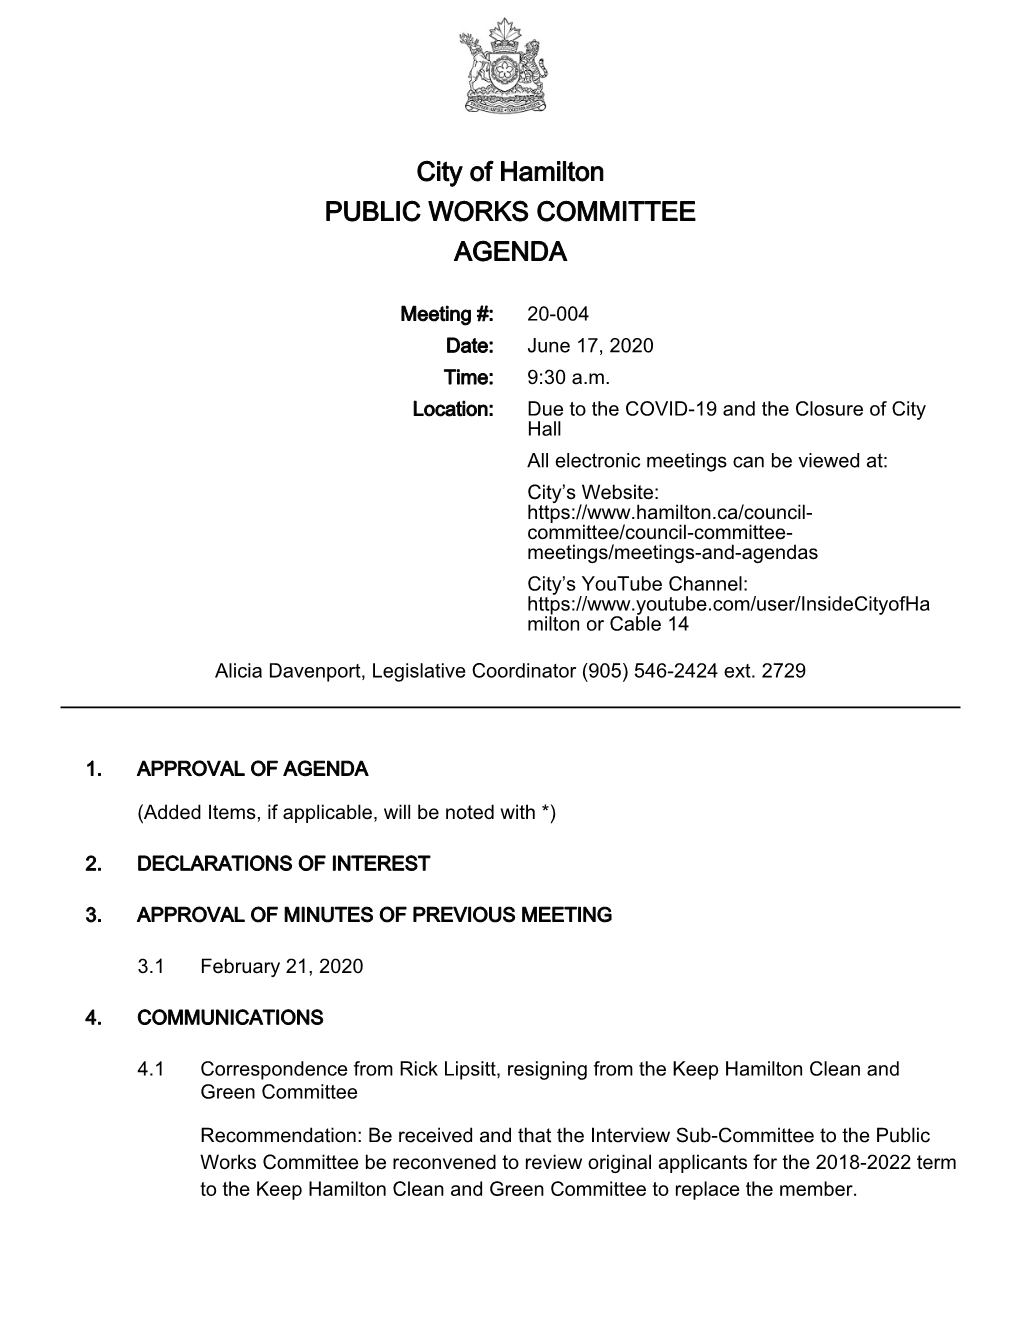 Public Works Committee Agenda Package